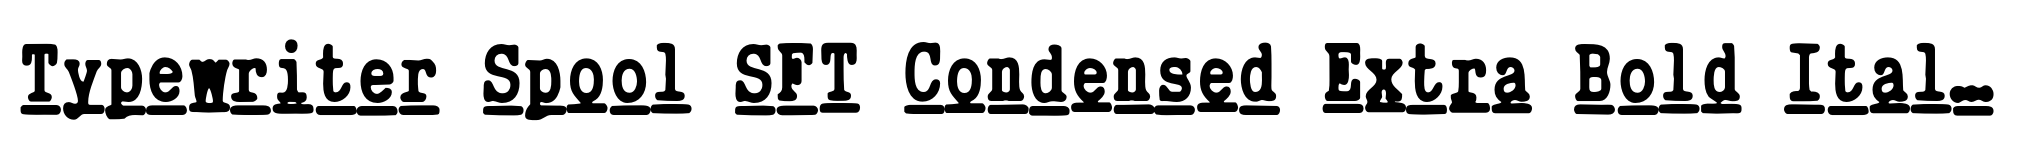 Typewriter Spool SFT Condensed Extra Bold Italic image